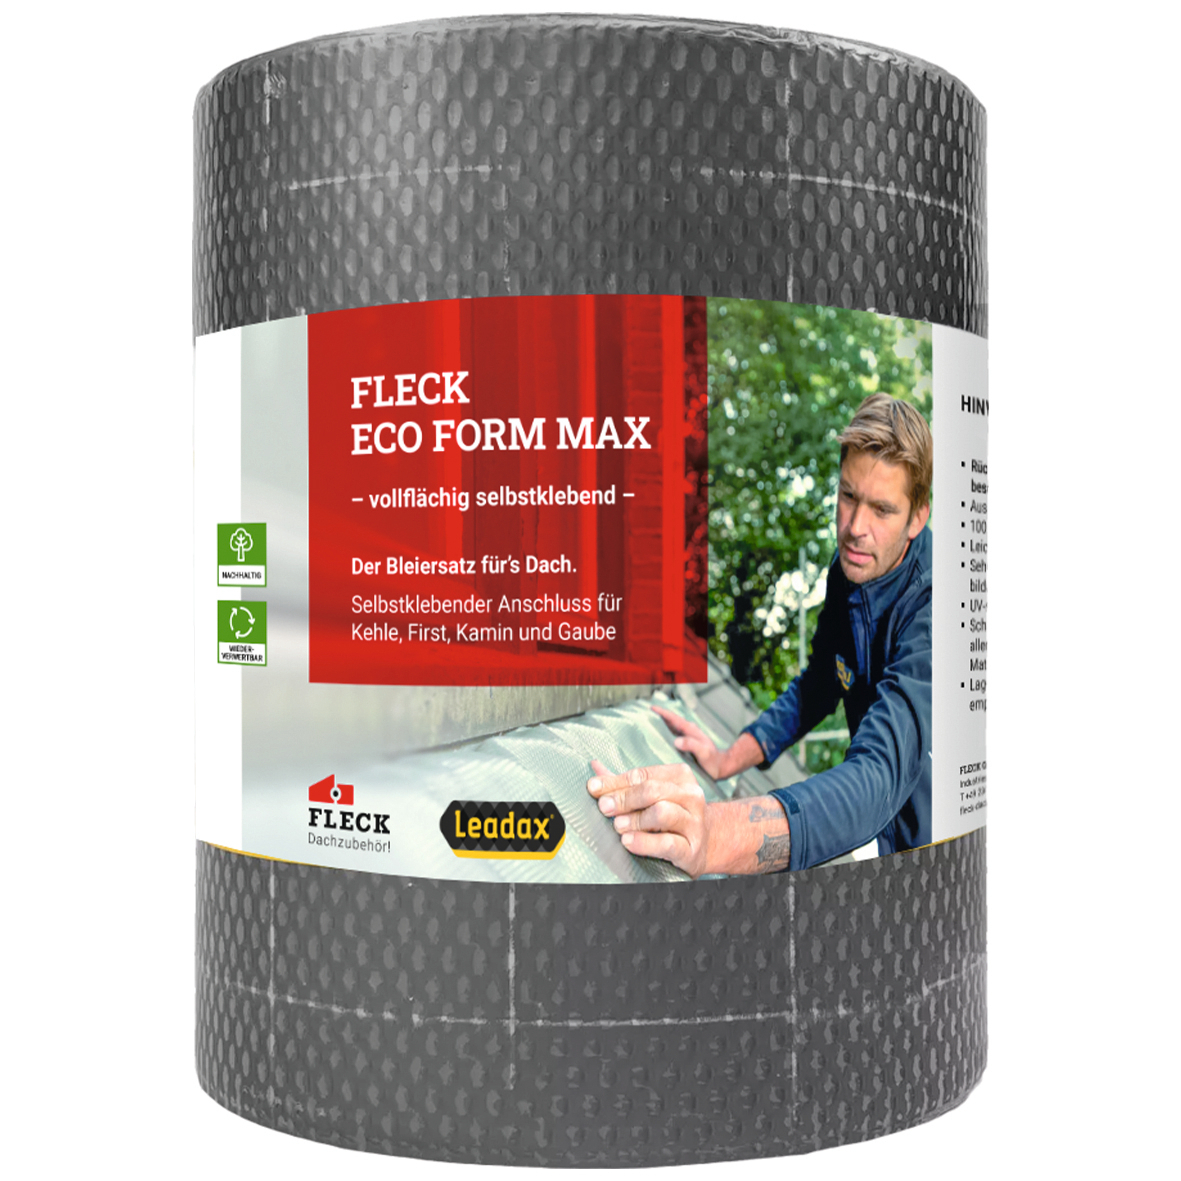 FLECK_ECO-FORM-MAX_Ziegelgrau_Banderole_300dpi.jpg